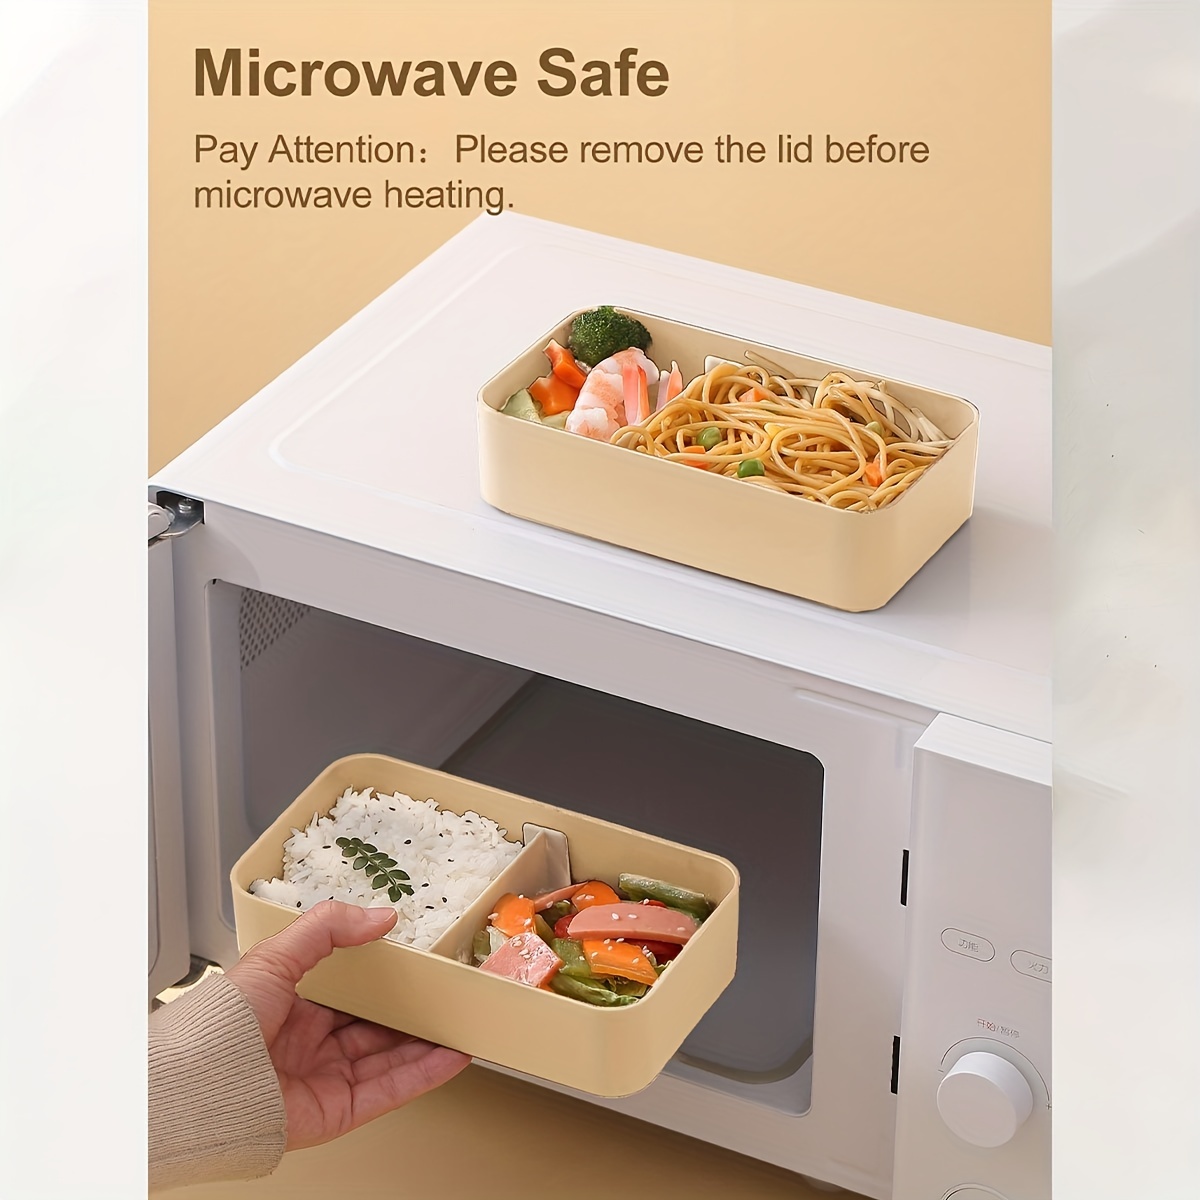 1440ml Microwavable Plastic Bento Lunch Box With Bag, Sauce